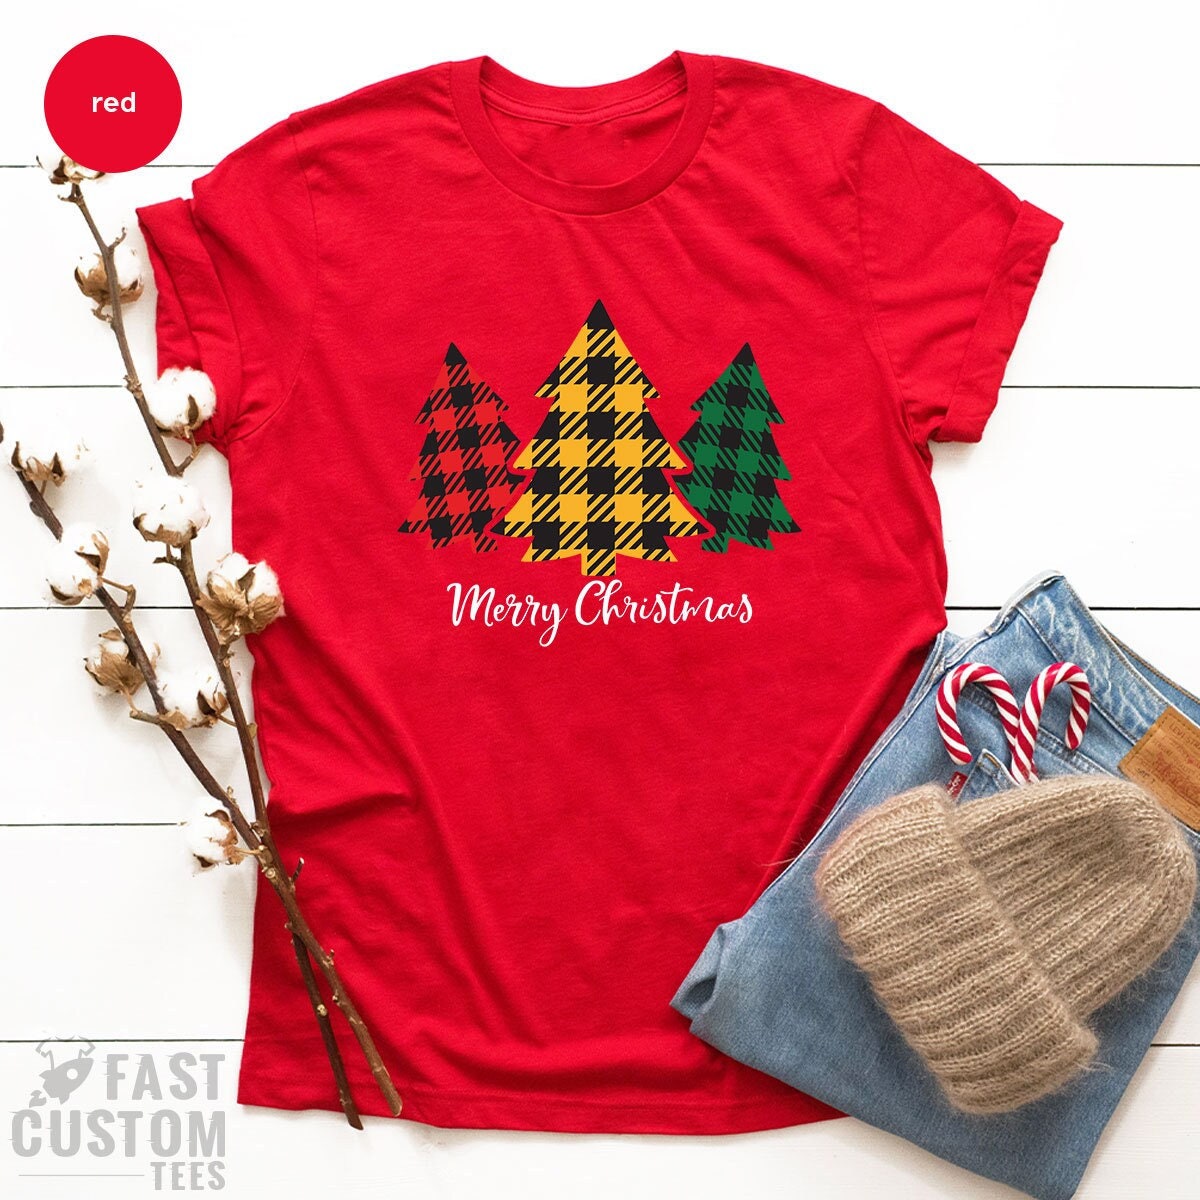 Christmas Tree T-shirt, Christmas T-Shirt, Merry Shirt, Women Christmas Gift, Cute Christmas Tee, Family Christmas Shirt, Holiday Merry Tee - Fastdeliverytees.com